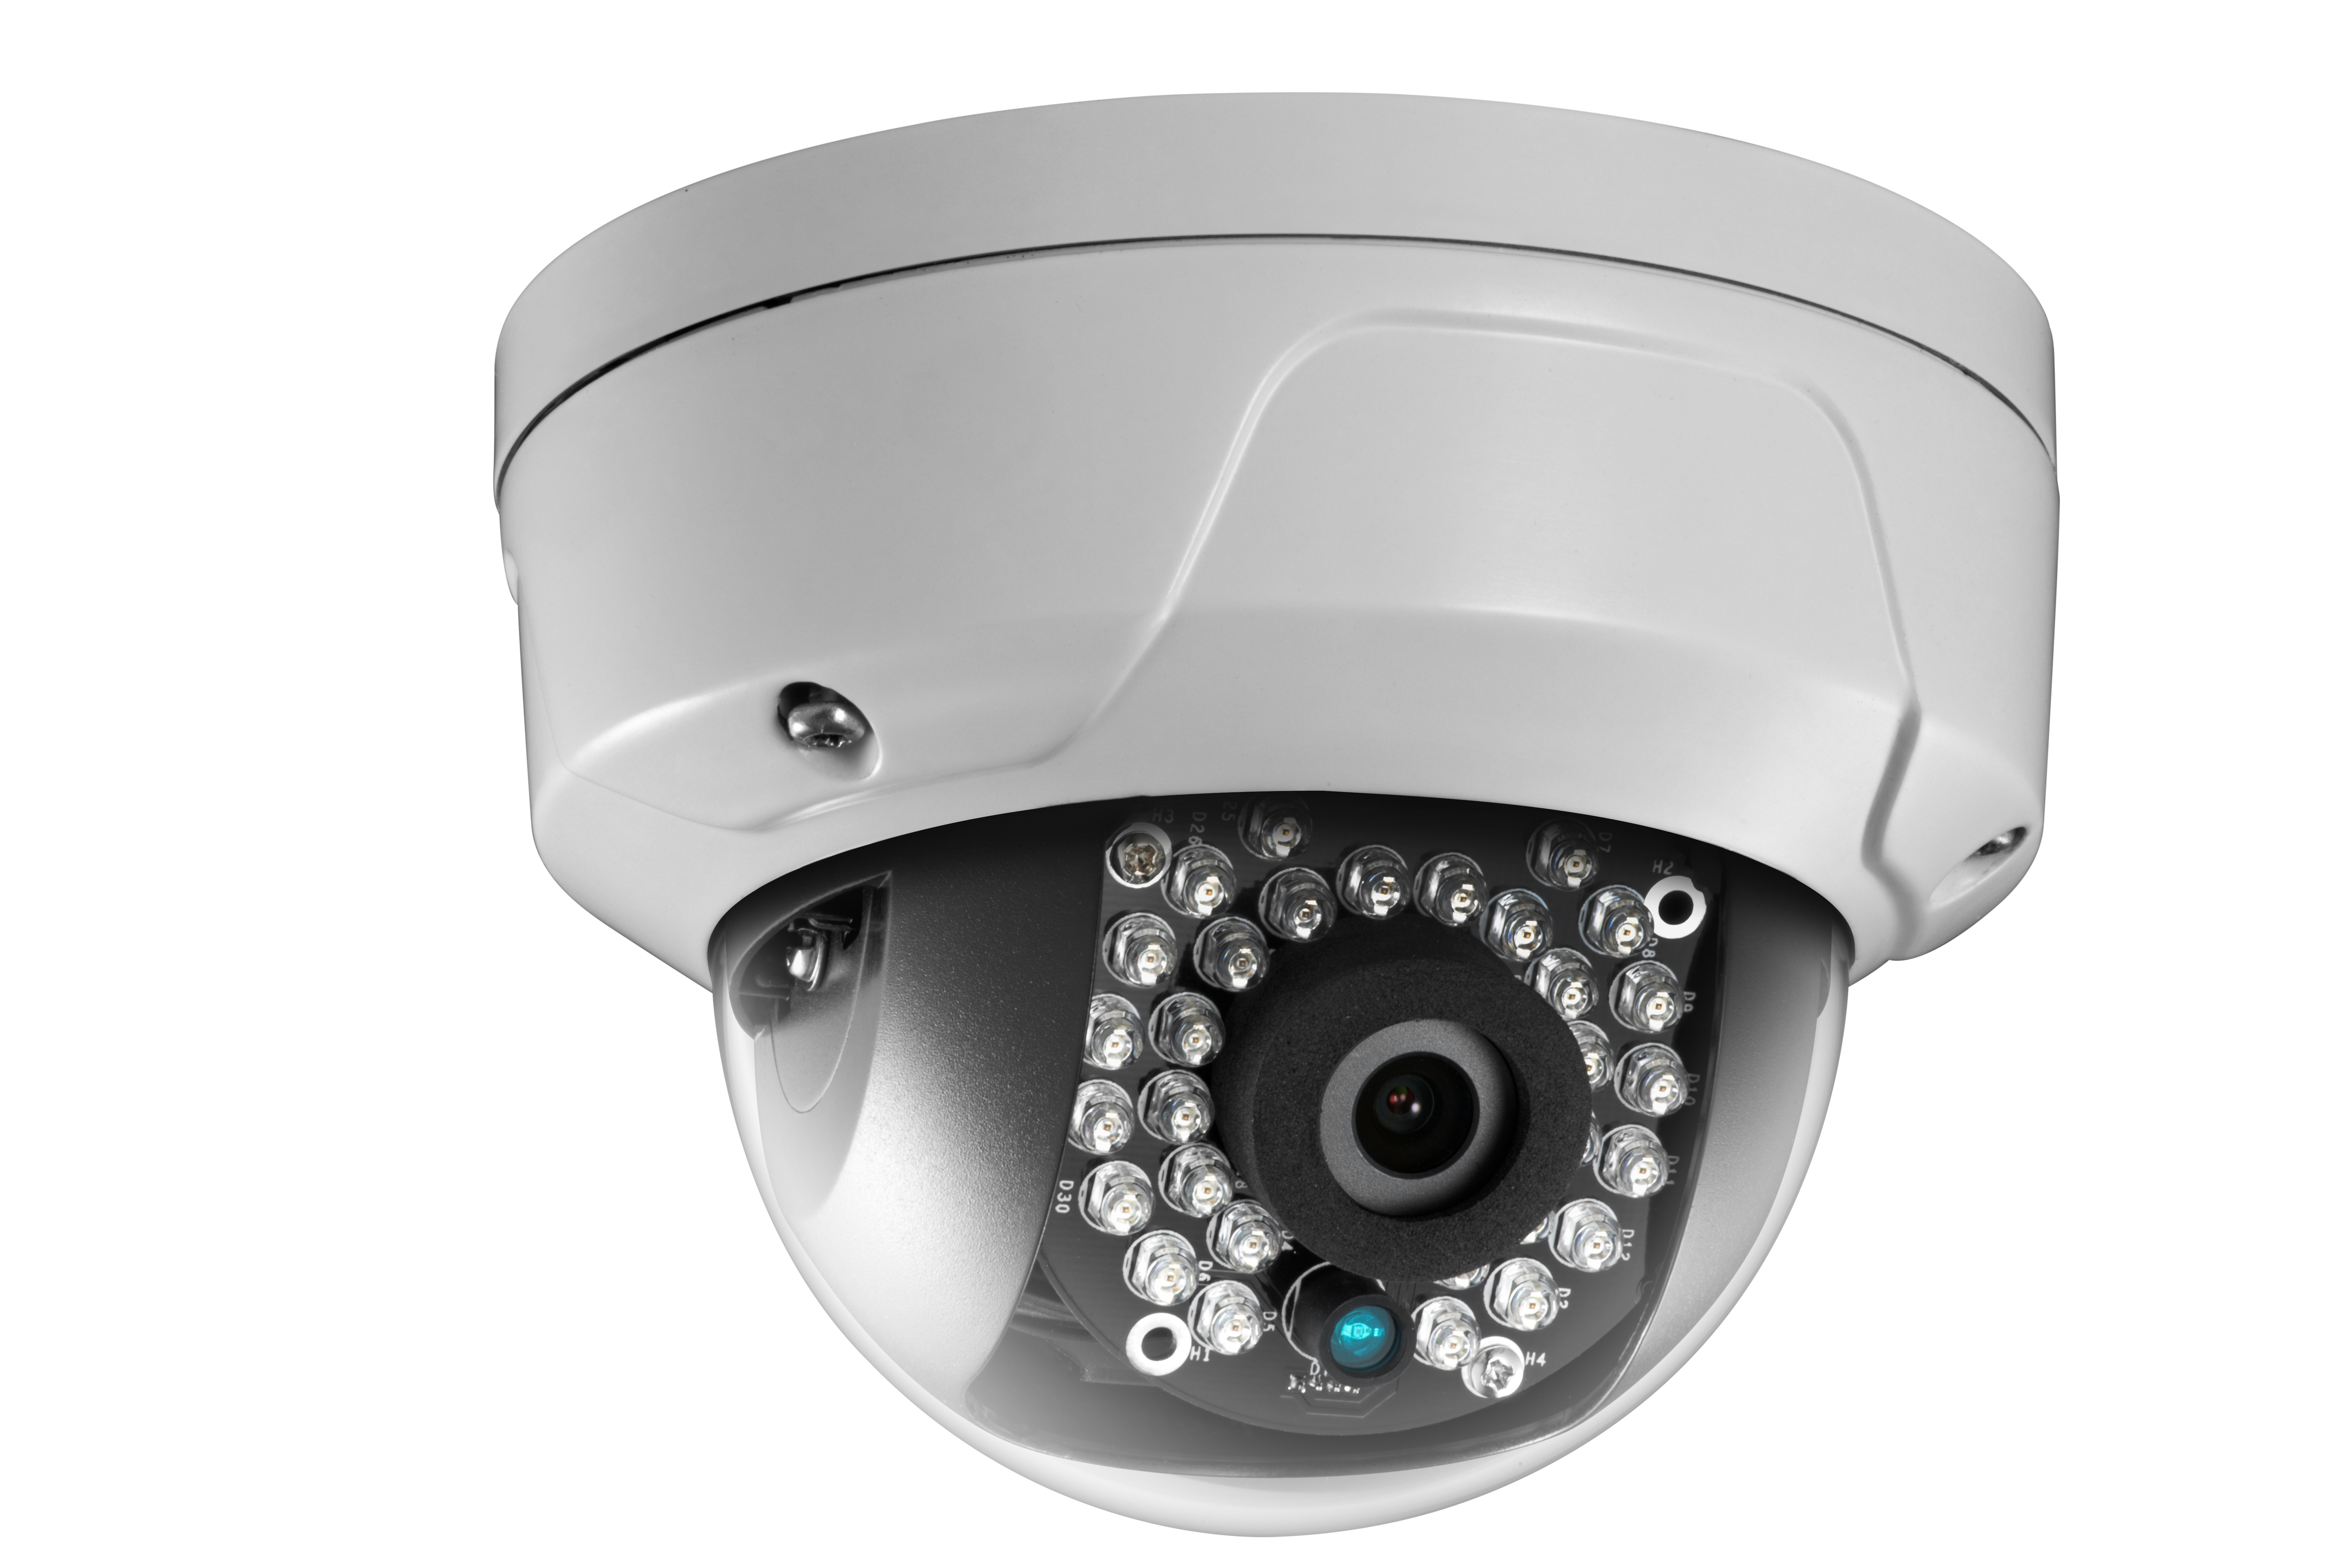 Hikvision CCTV SYSTEM HIKVISION HILOOK HDMI DVR DOME NIGHT VISION OUTDOOR CAMERA FULL KIT 